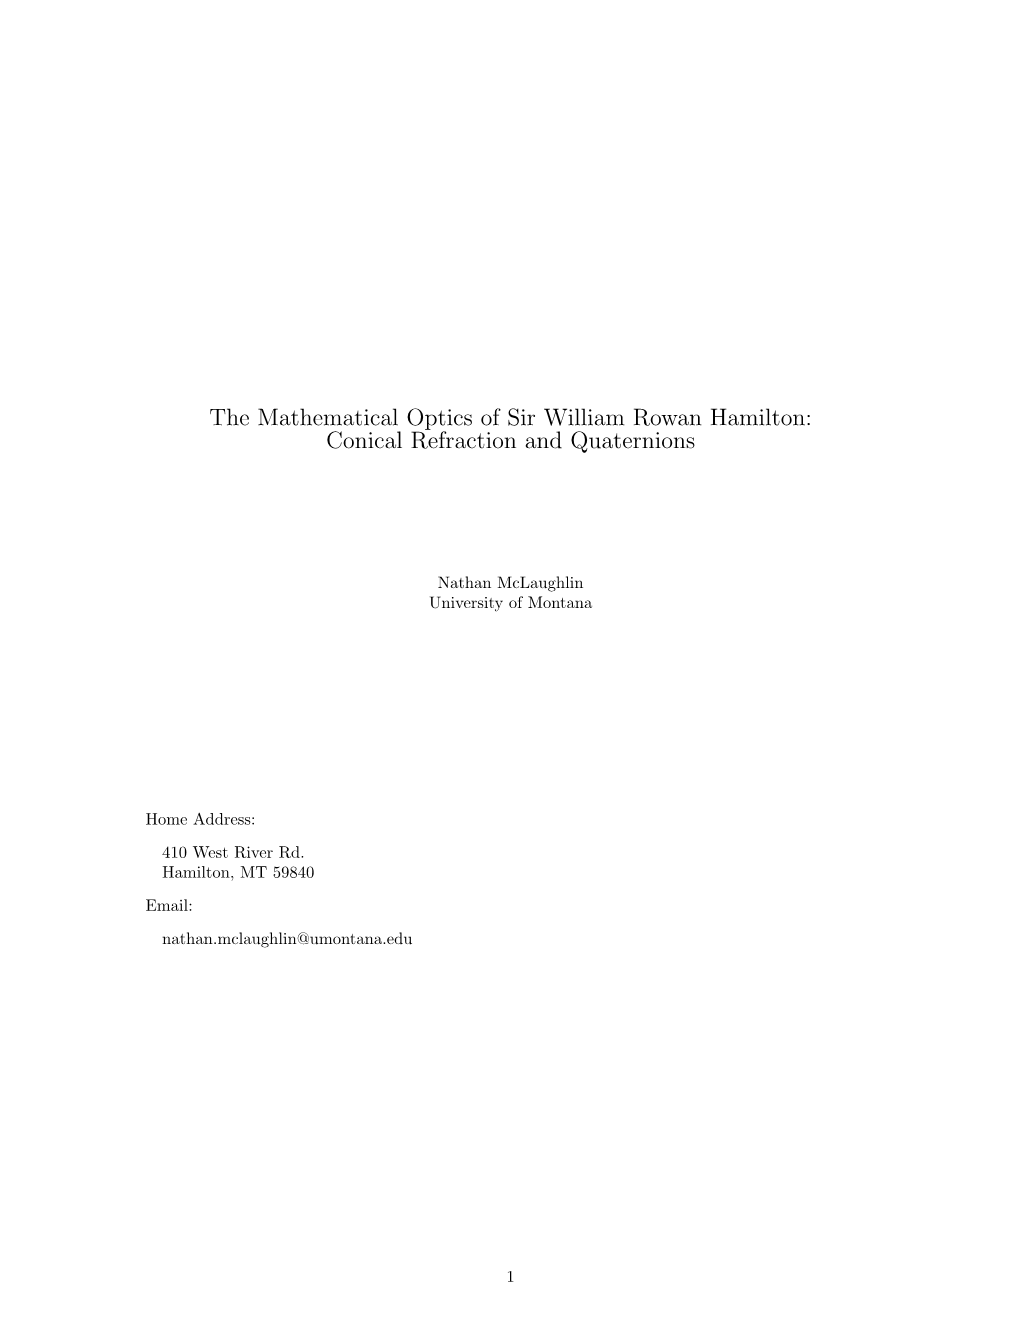 The Mathematical Optics of Sir William Rowan Hamilton: Conical Refraction and Quaternions